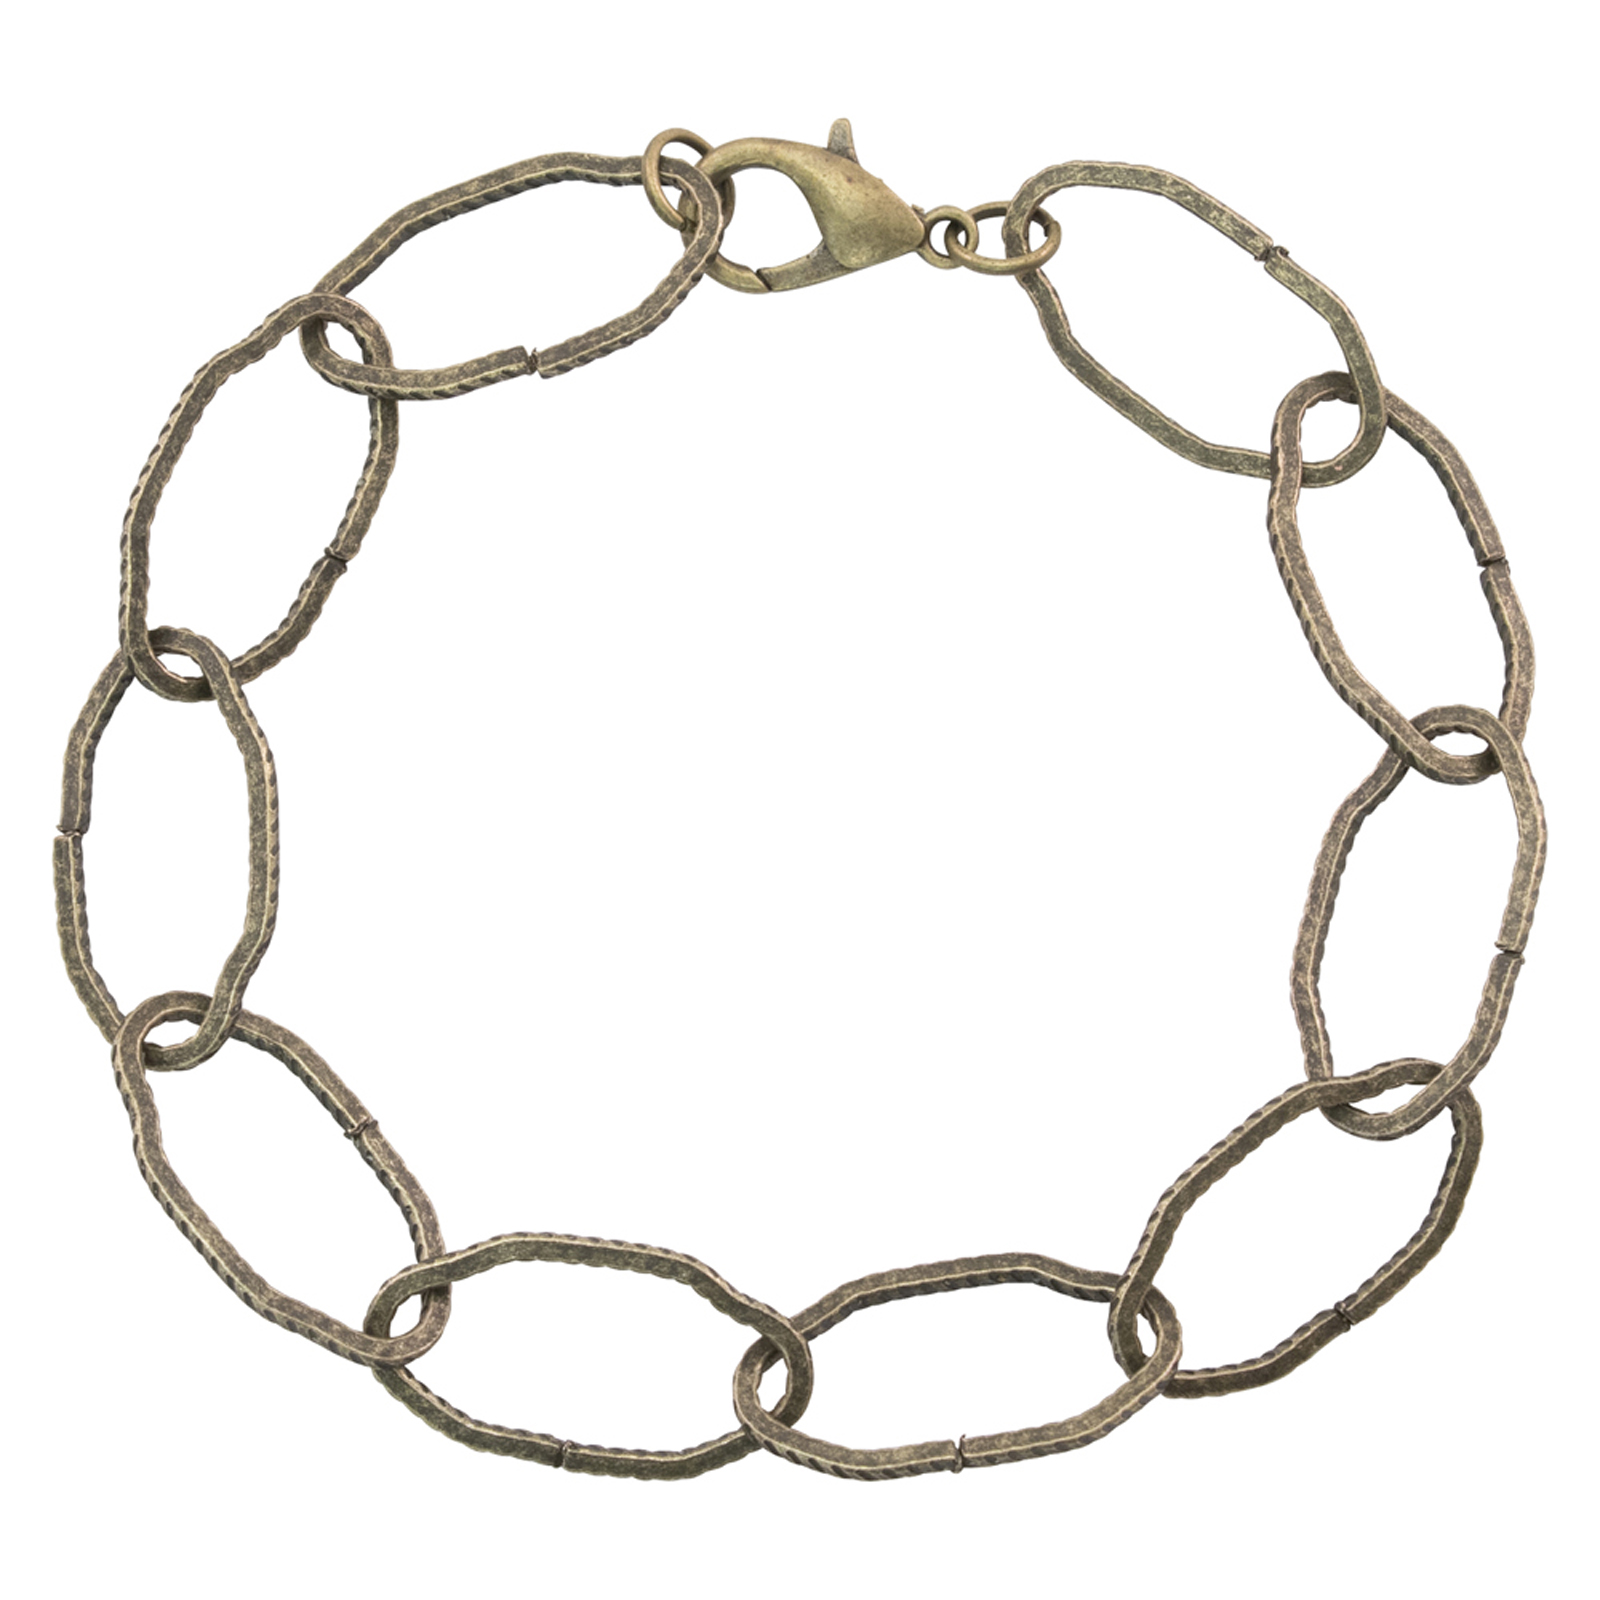 Advantus • Assemblage chain 8" Oblong brass link